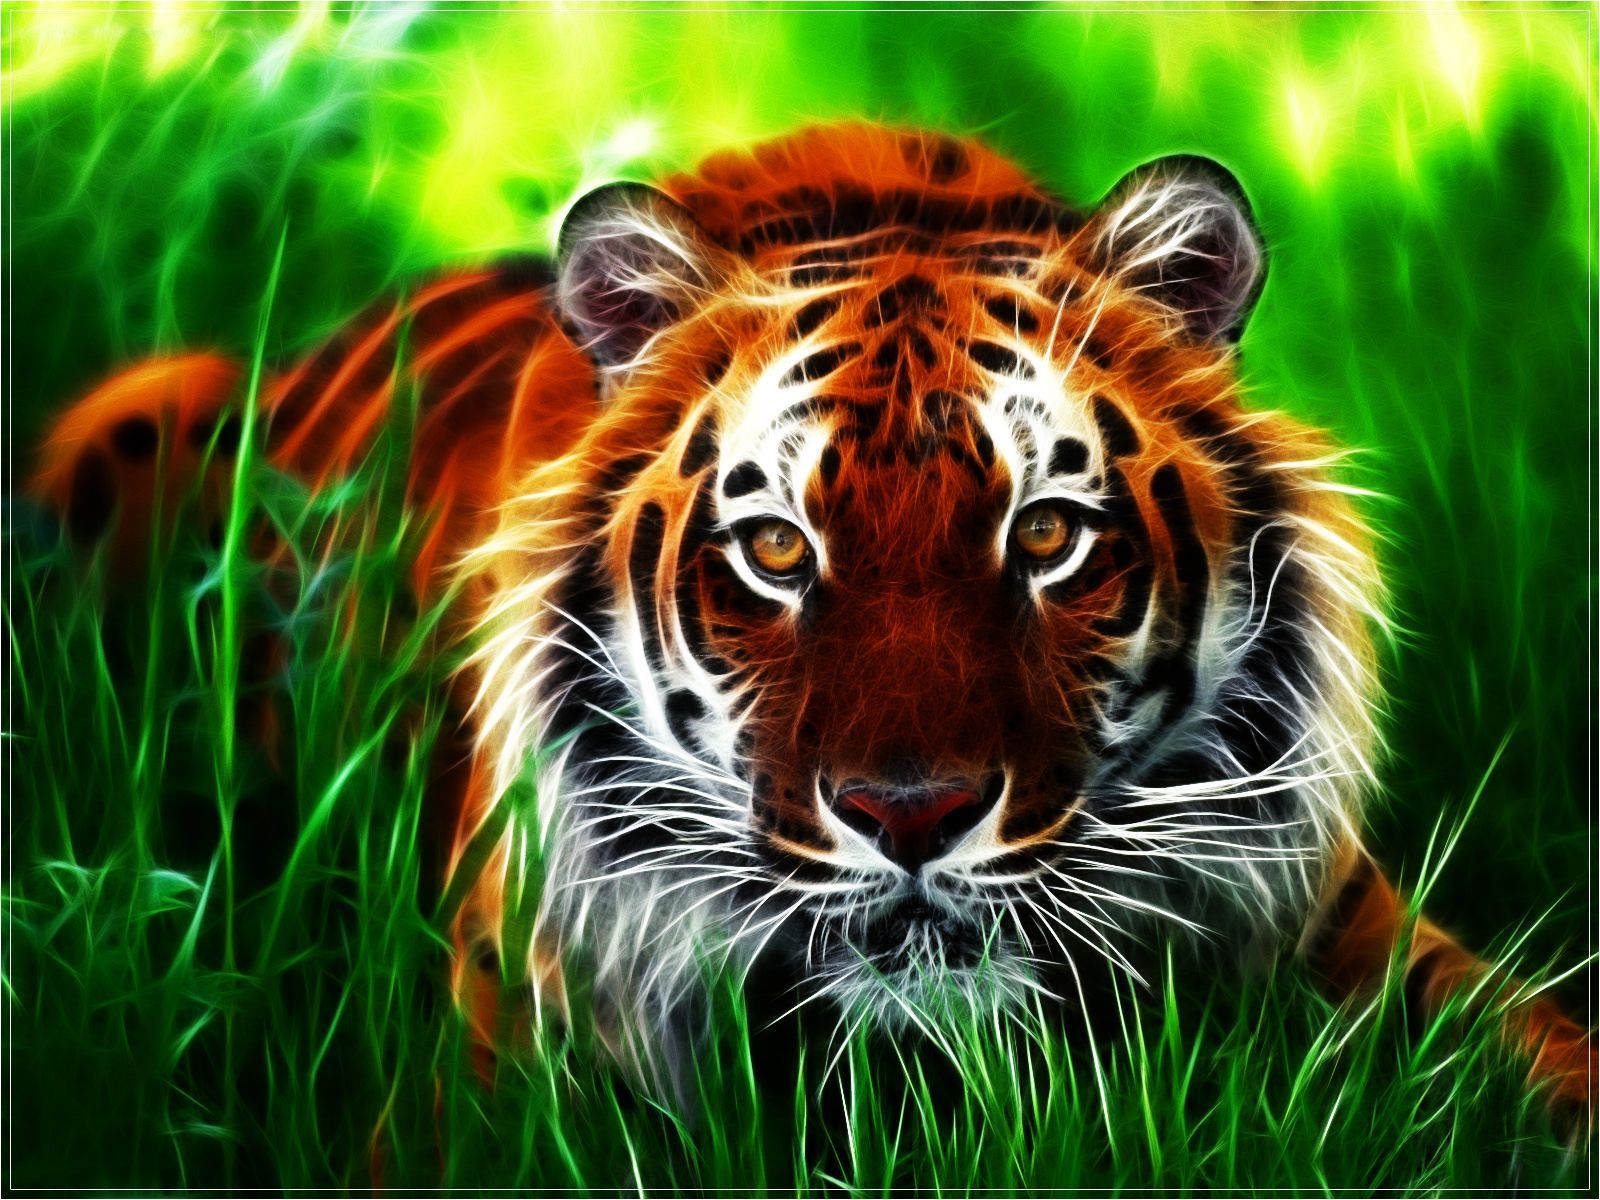 Tiger Computer Wallpapers, Desktop Backgrounds 1920x1440 ID472563